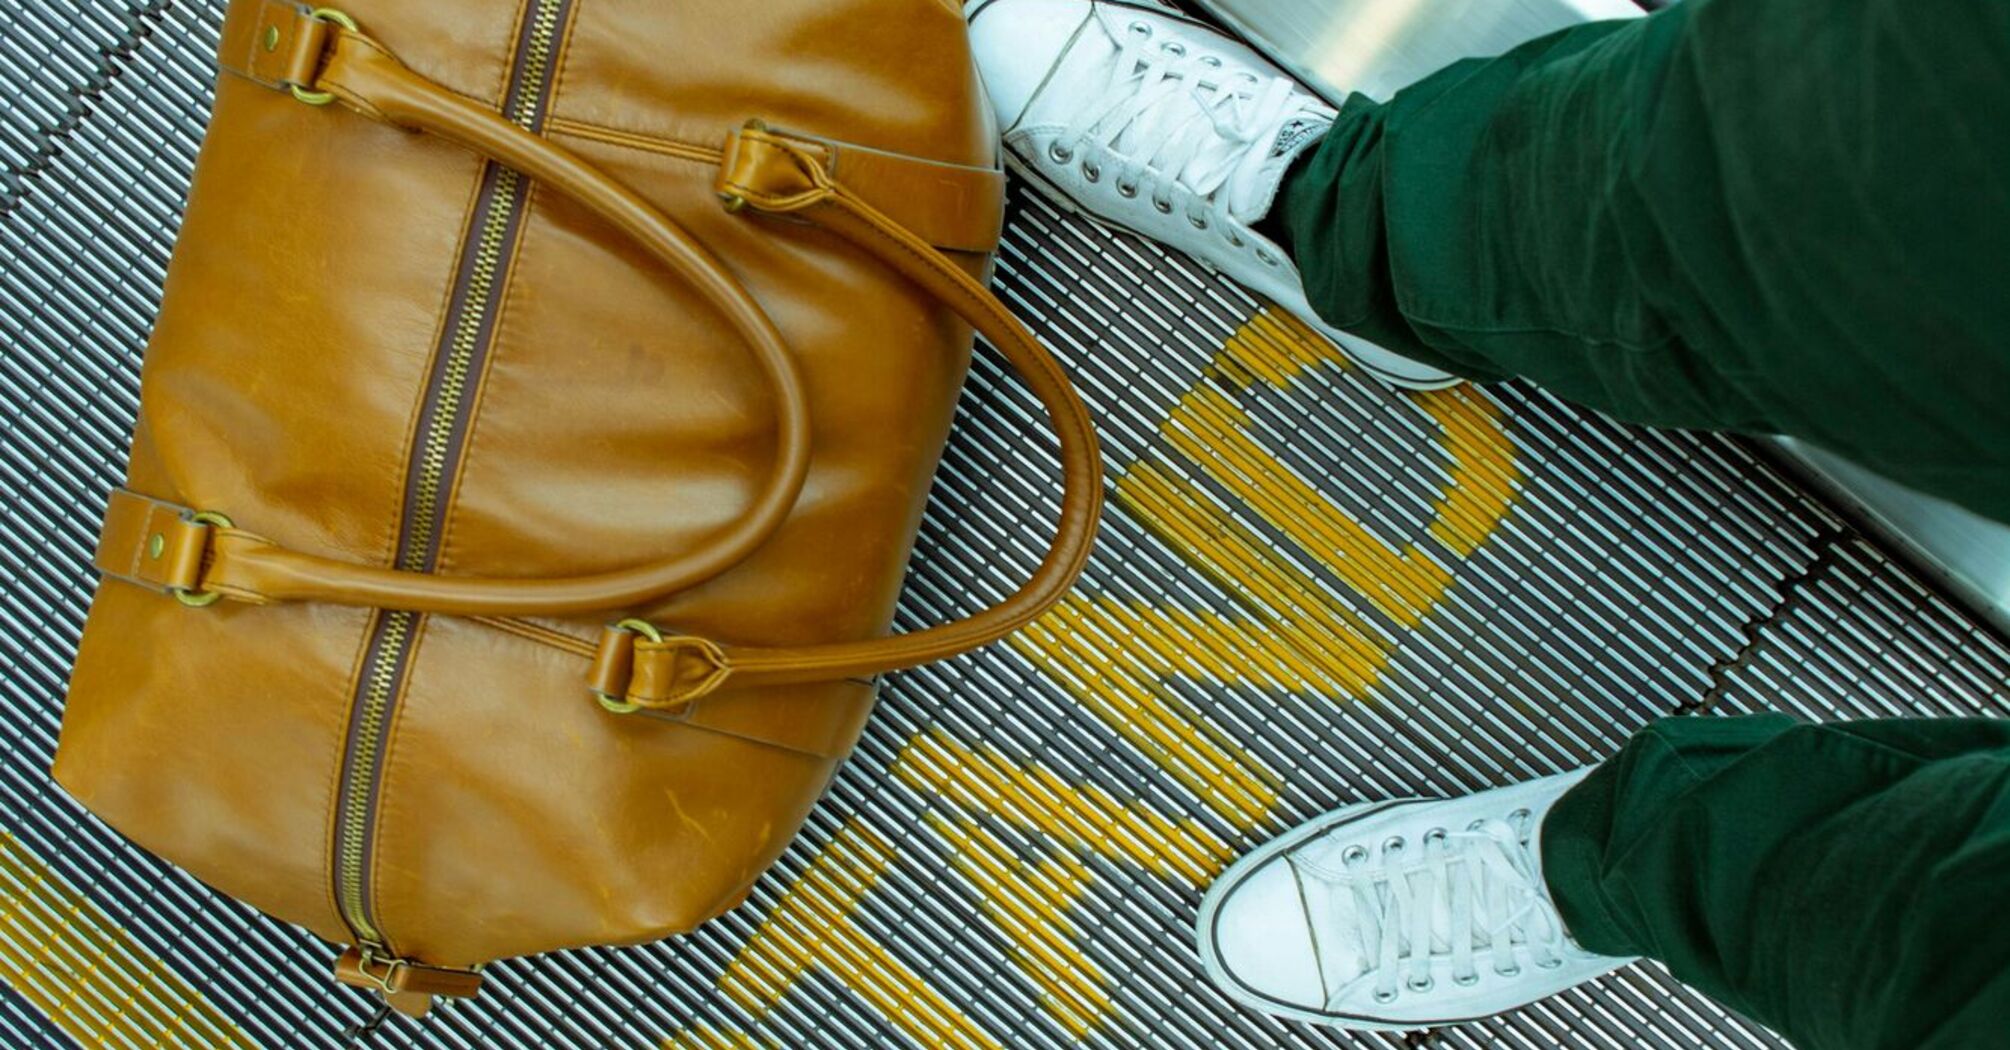 A traveler's tan leather bag on an airport conveyor belt